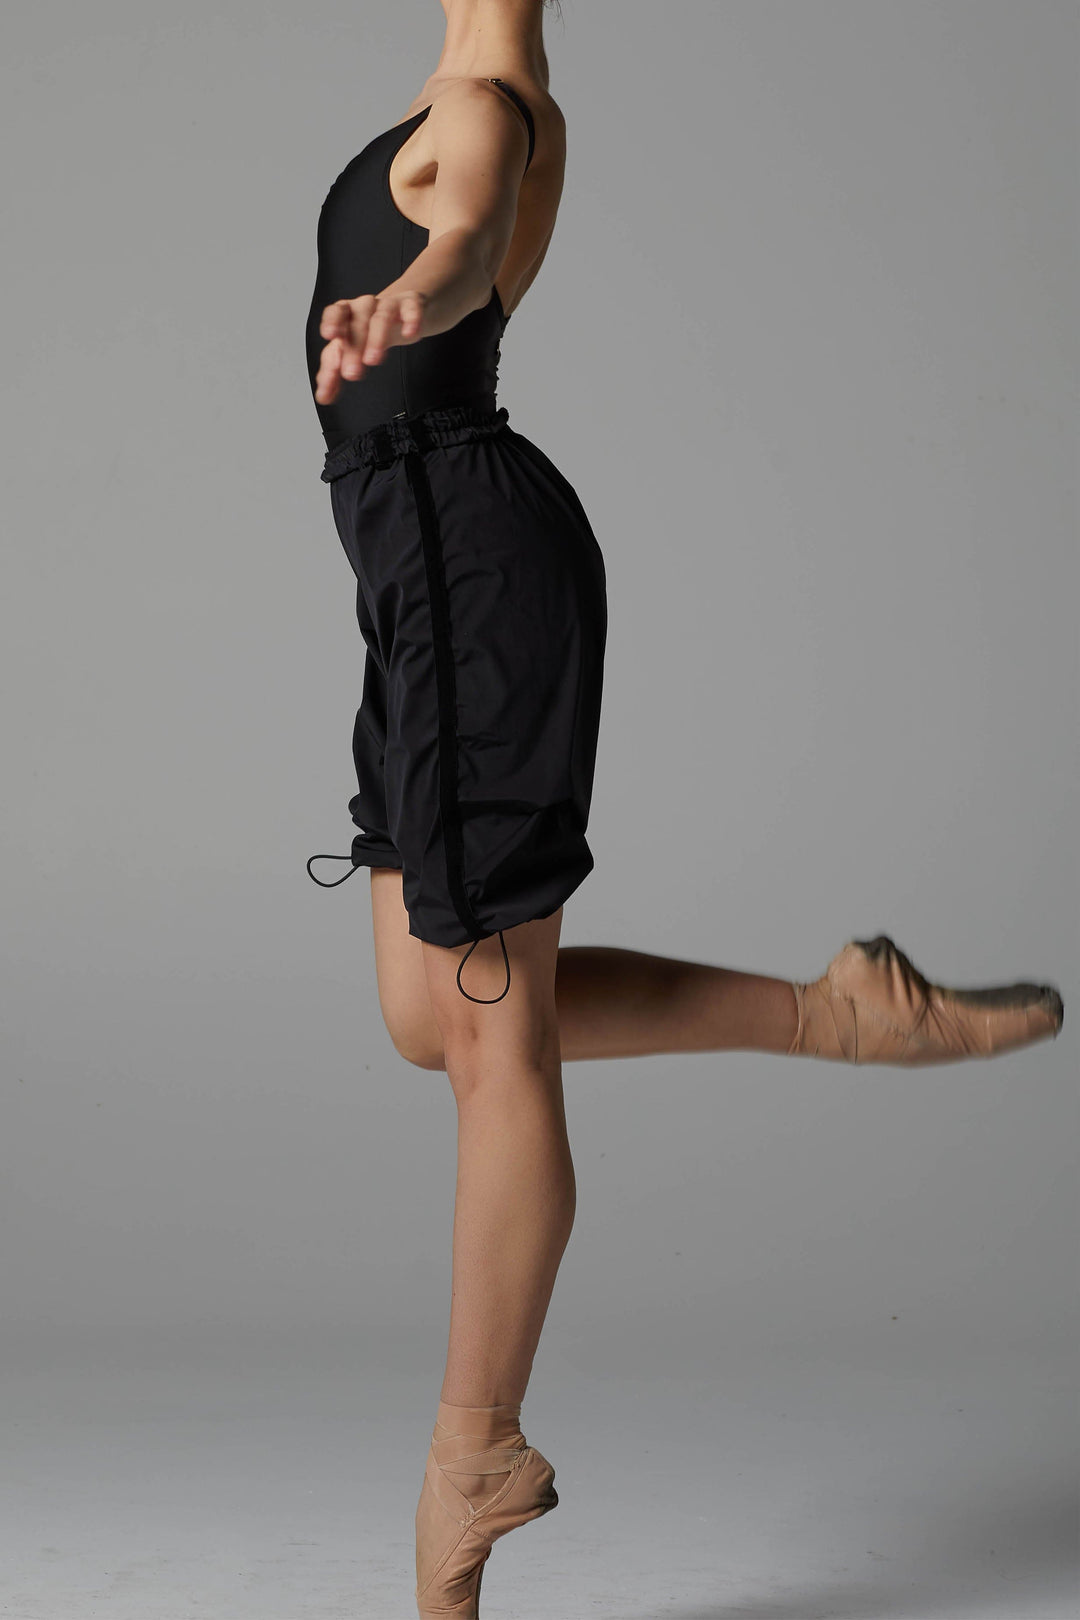 Warming sauna-shorts for ballet, dance, yoga and sport